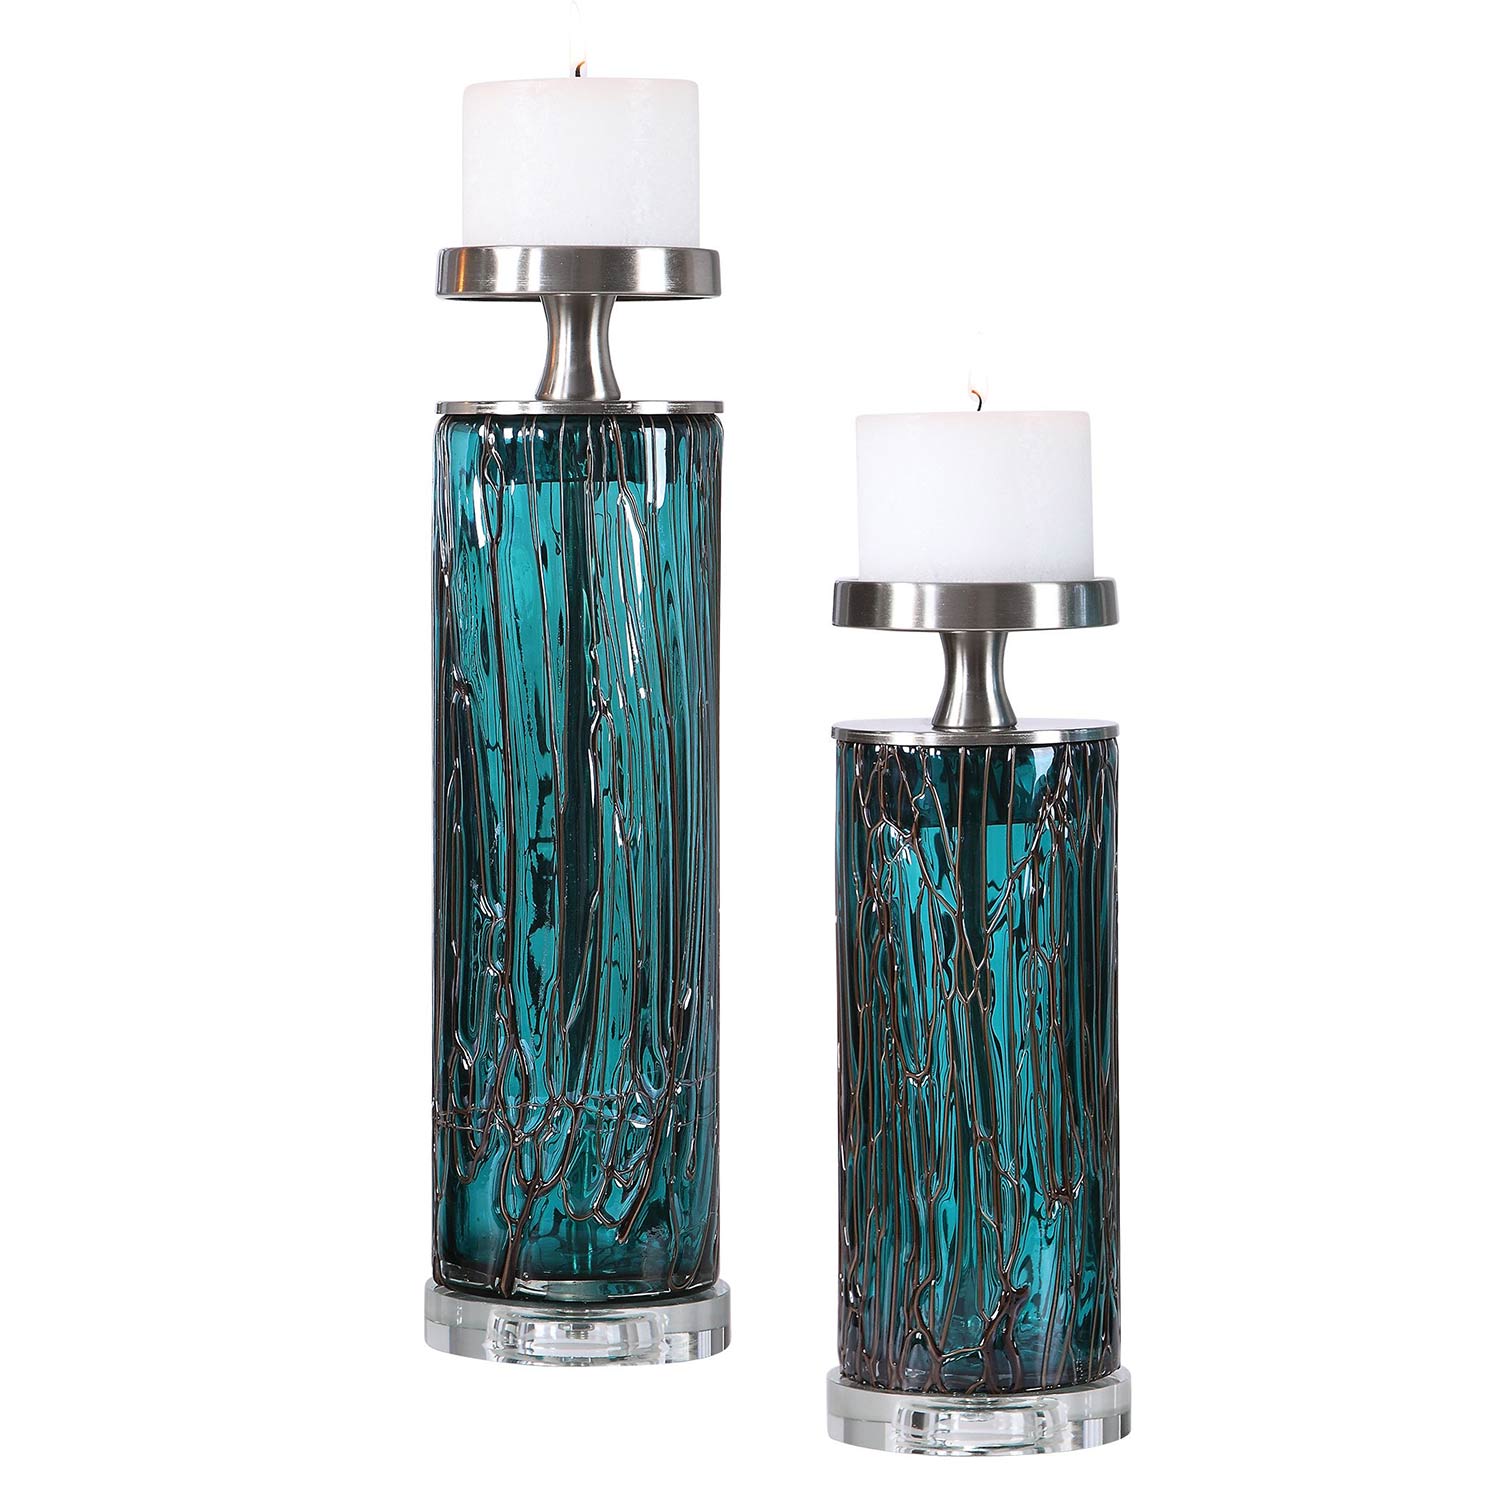 Uttermost Almanzora Teal Glass Candleholders - Set of 2